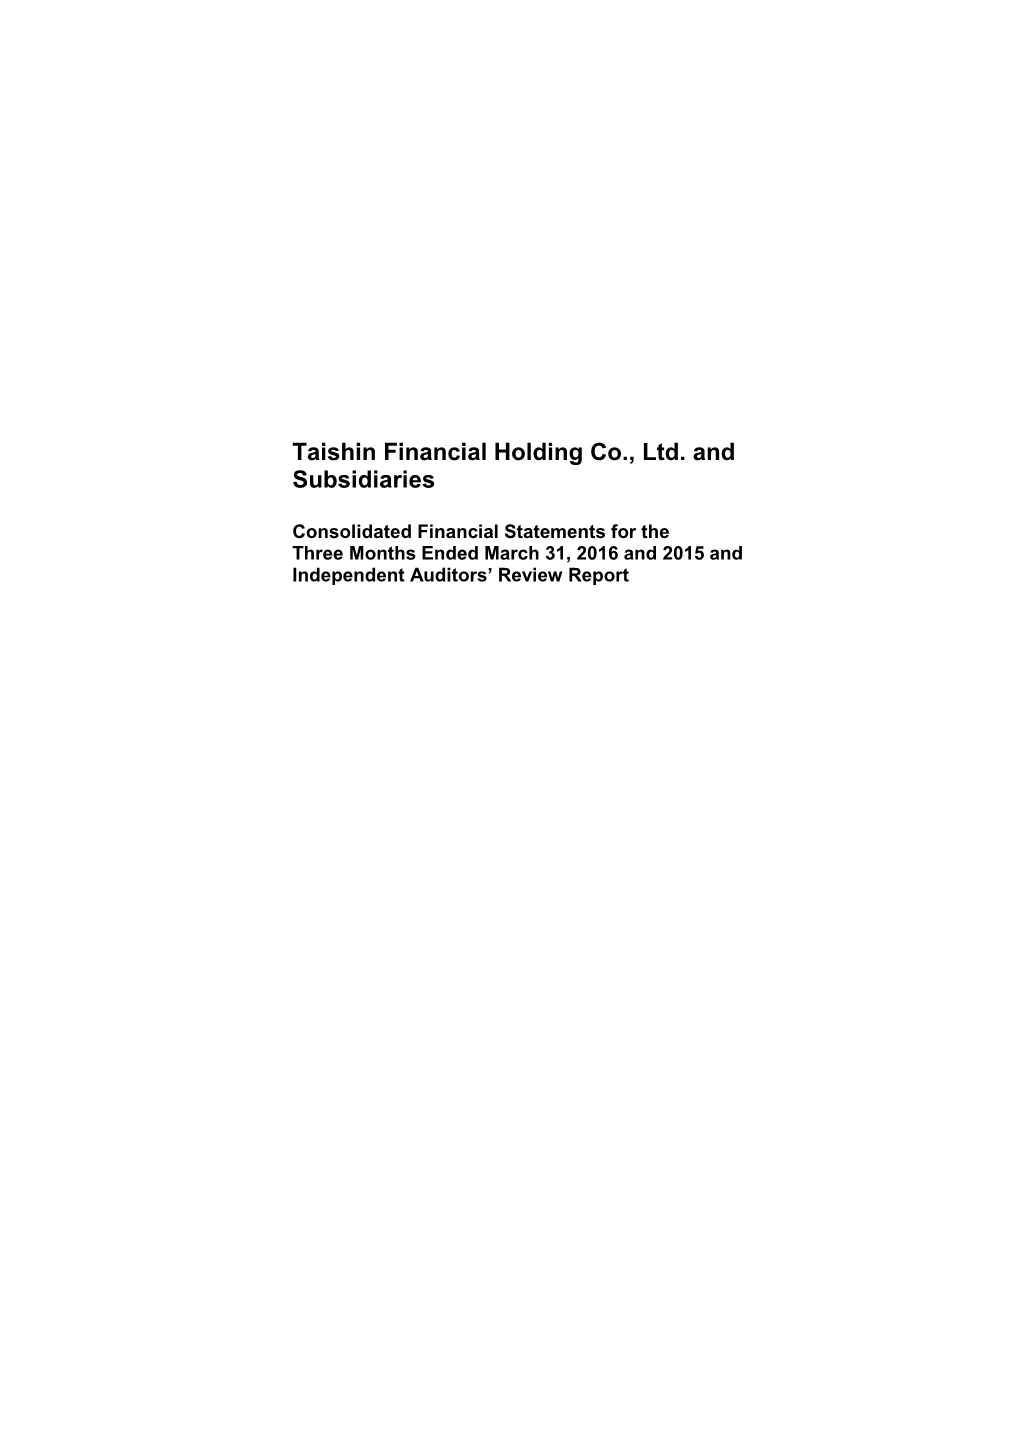 Taishin Financial Holding Co., Ltd. and Subsidiaries